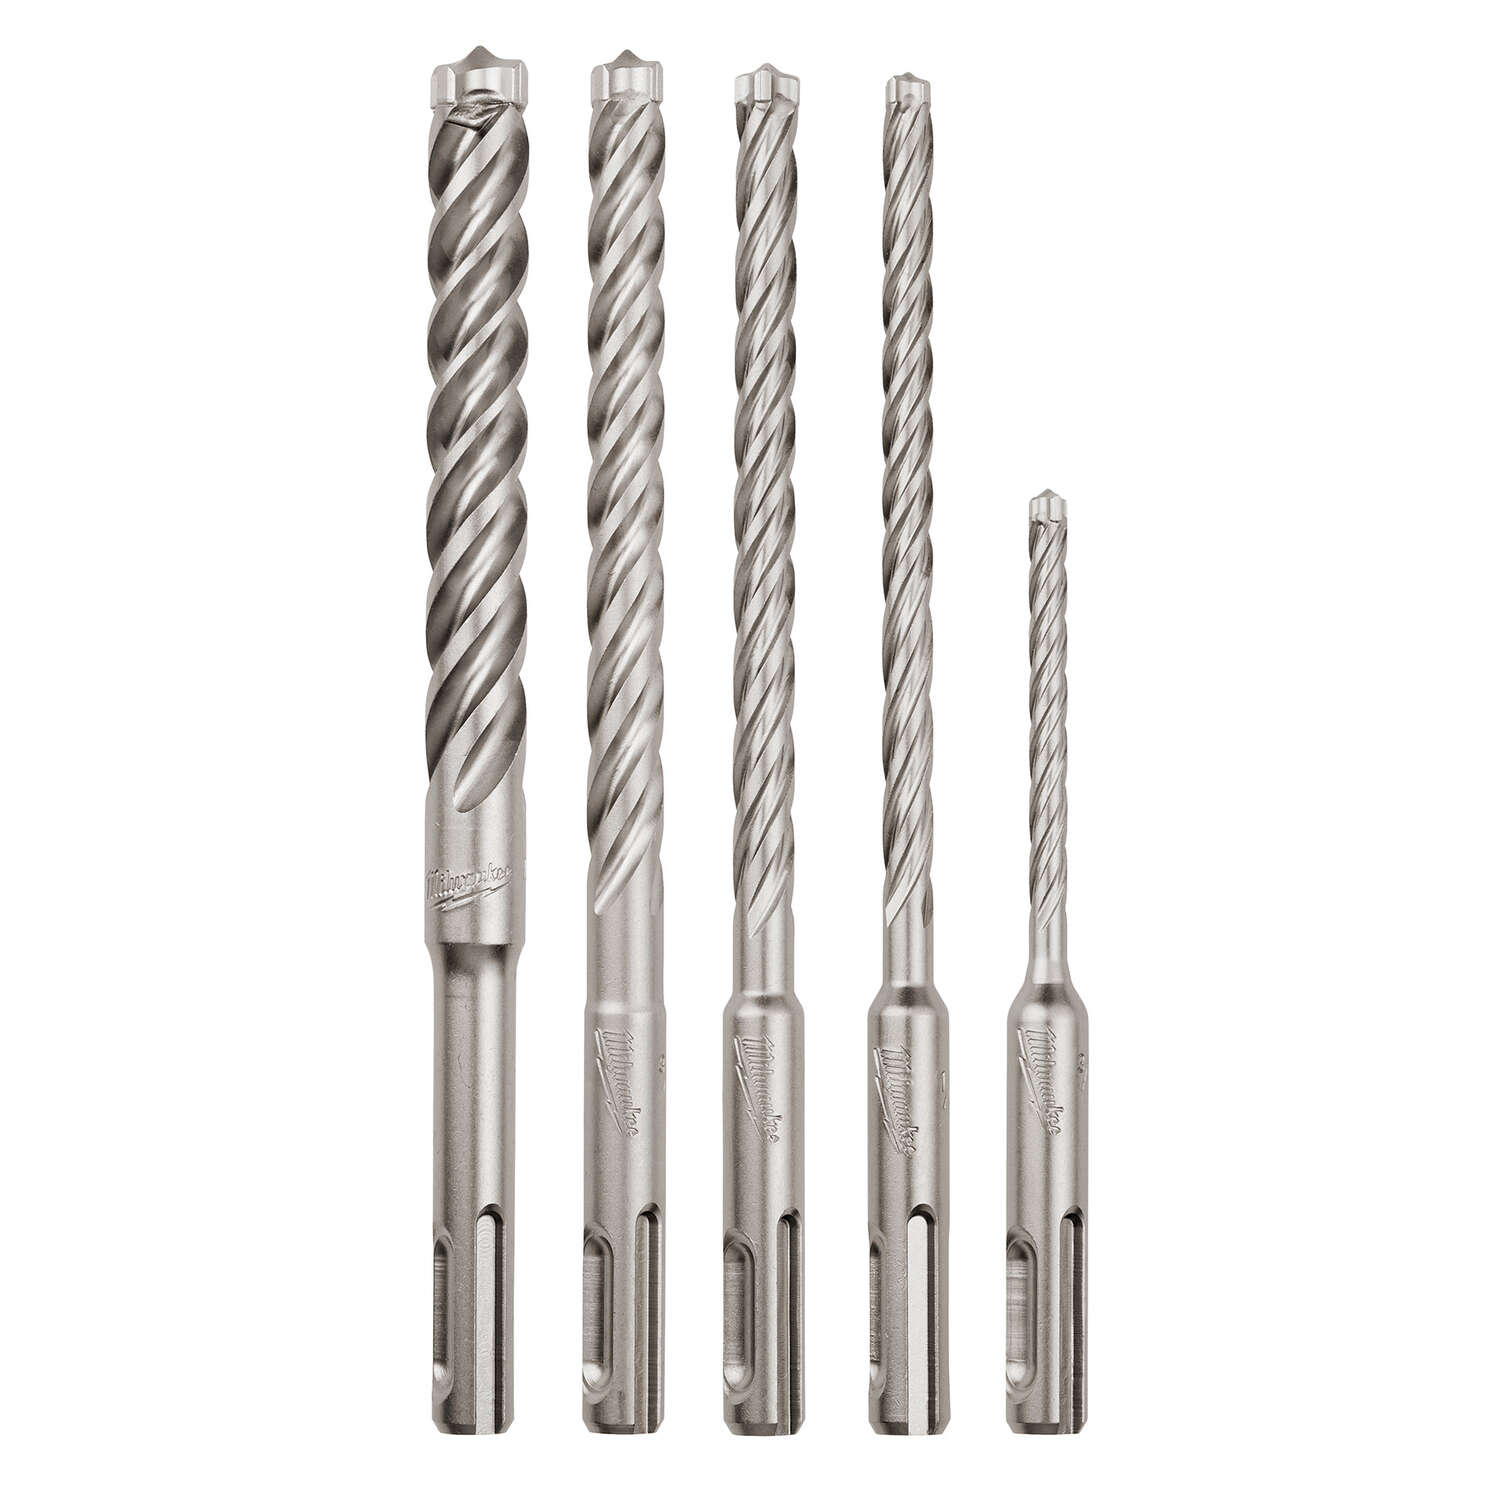 New Milwaukee Masonry Carbide Tip Drill Bit 3/8" x 4" x 1/4" shank 